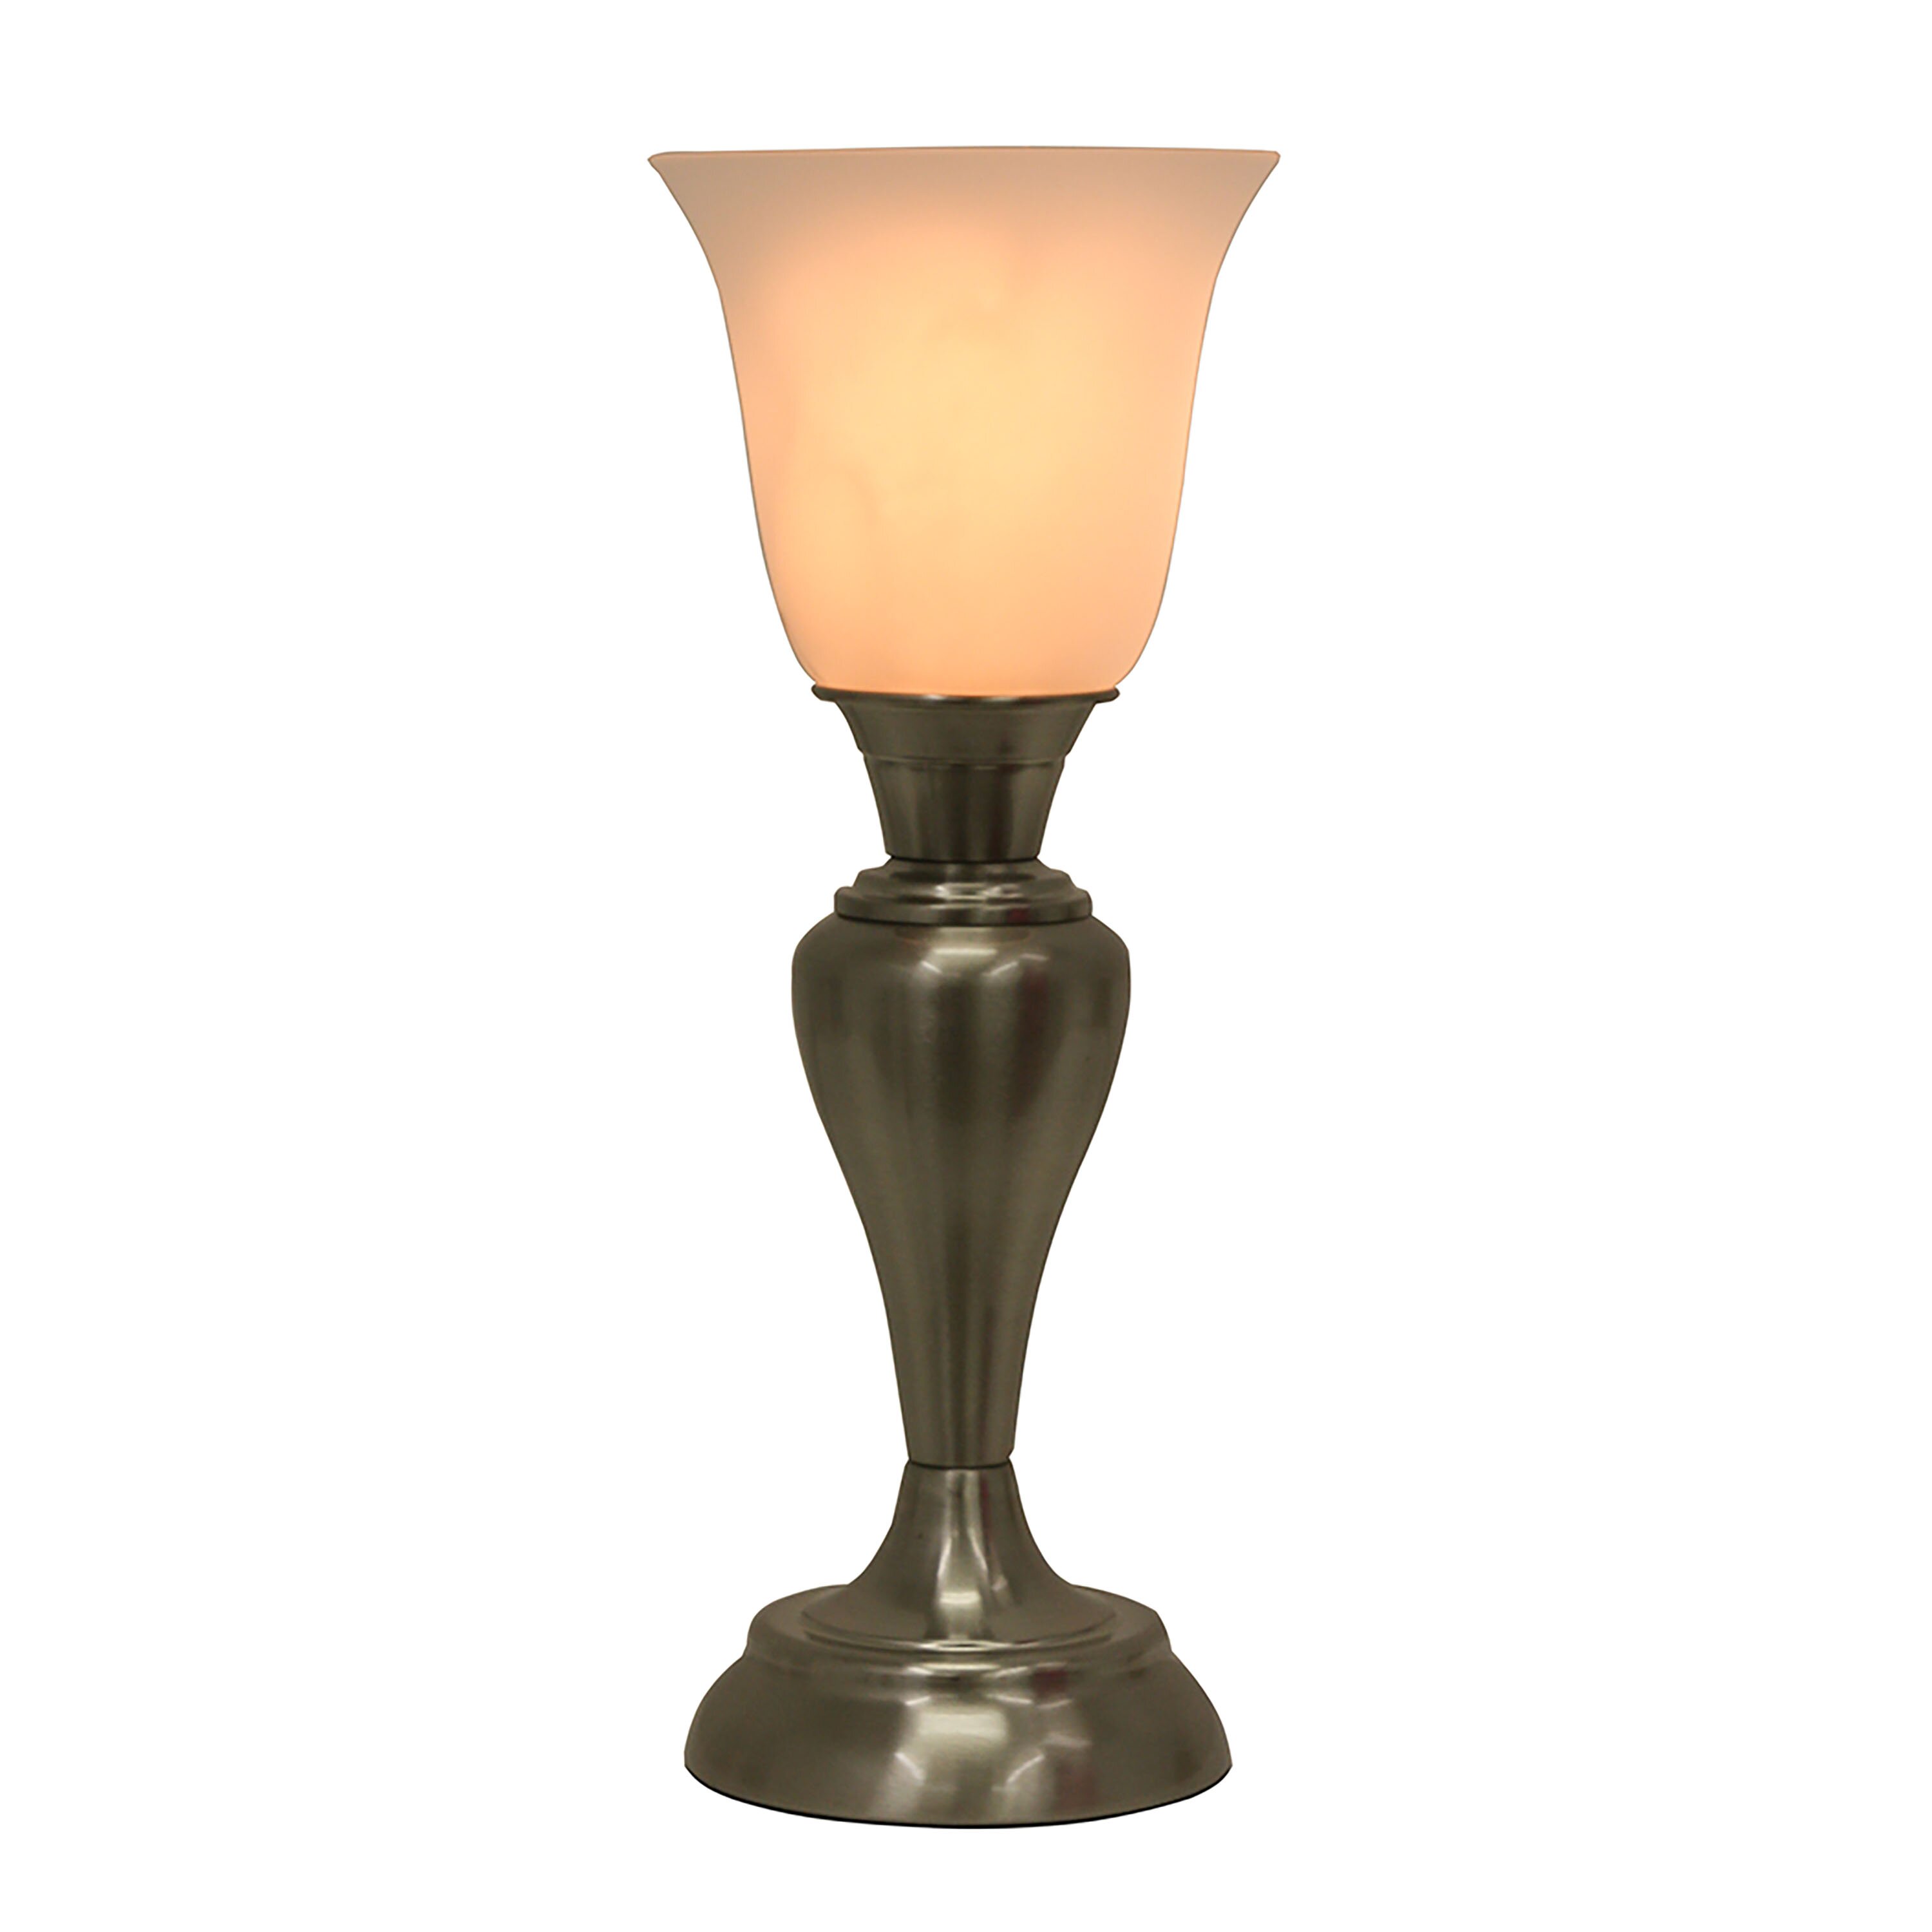 Decor Therapy Uplight 15.5" Table Lamp & Reviews | Wayfair